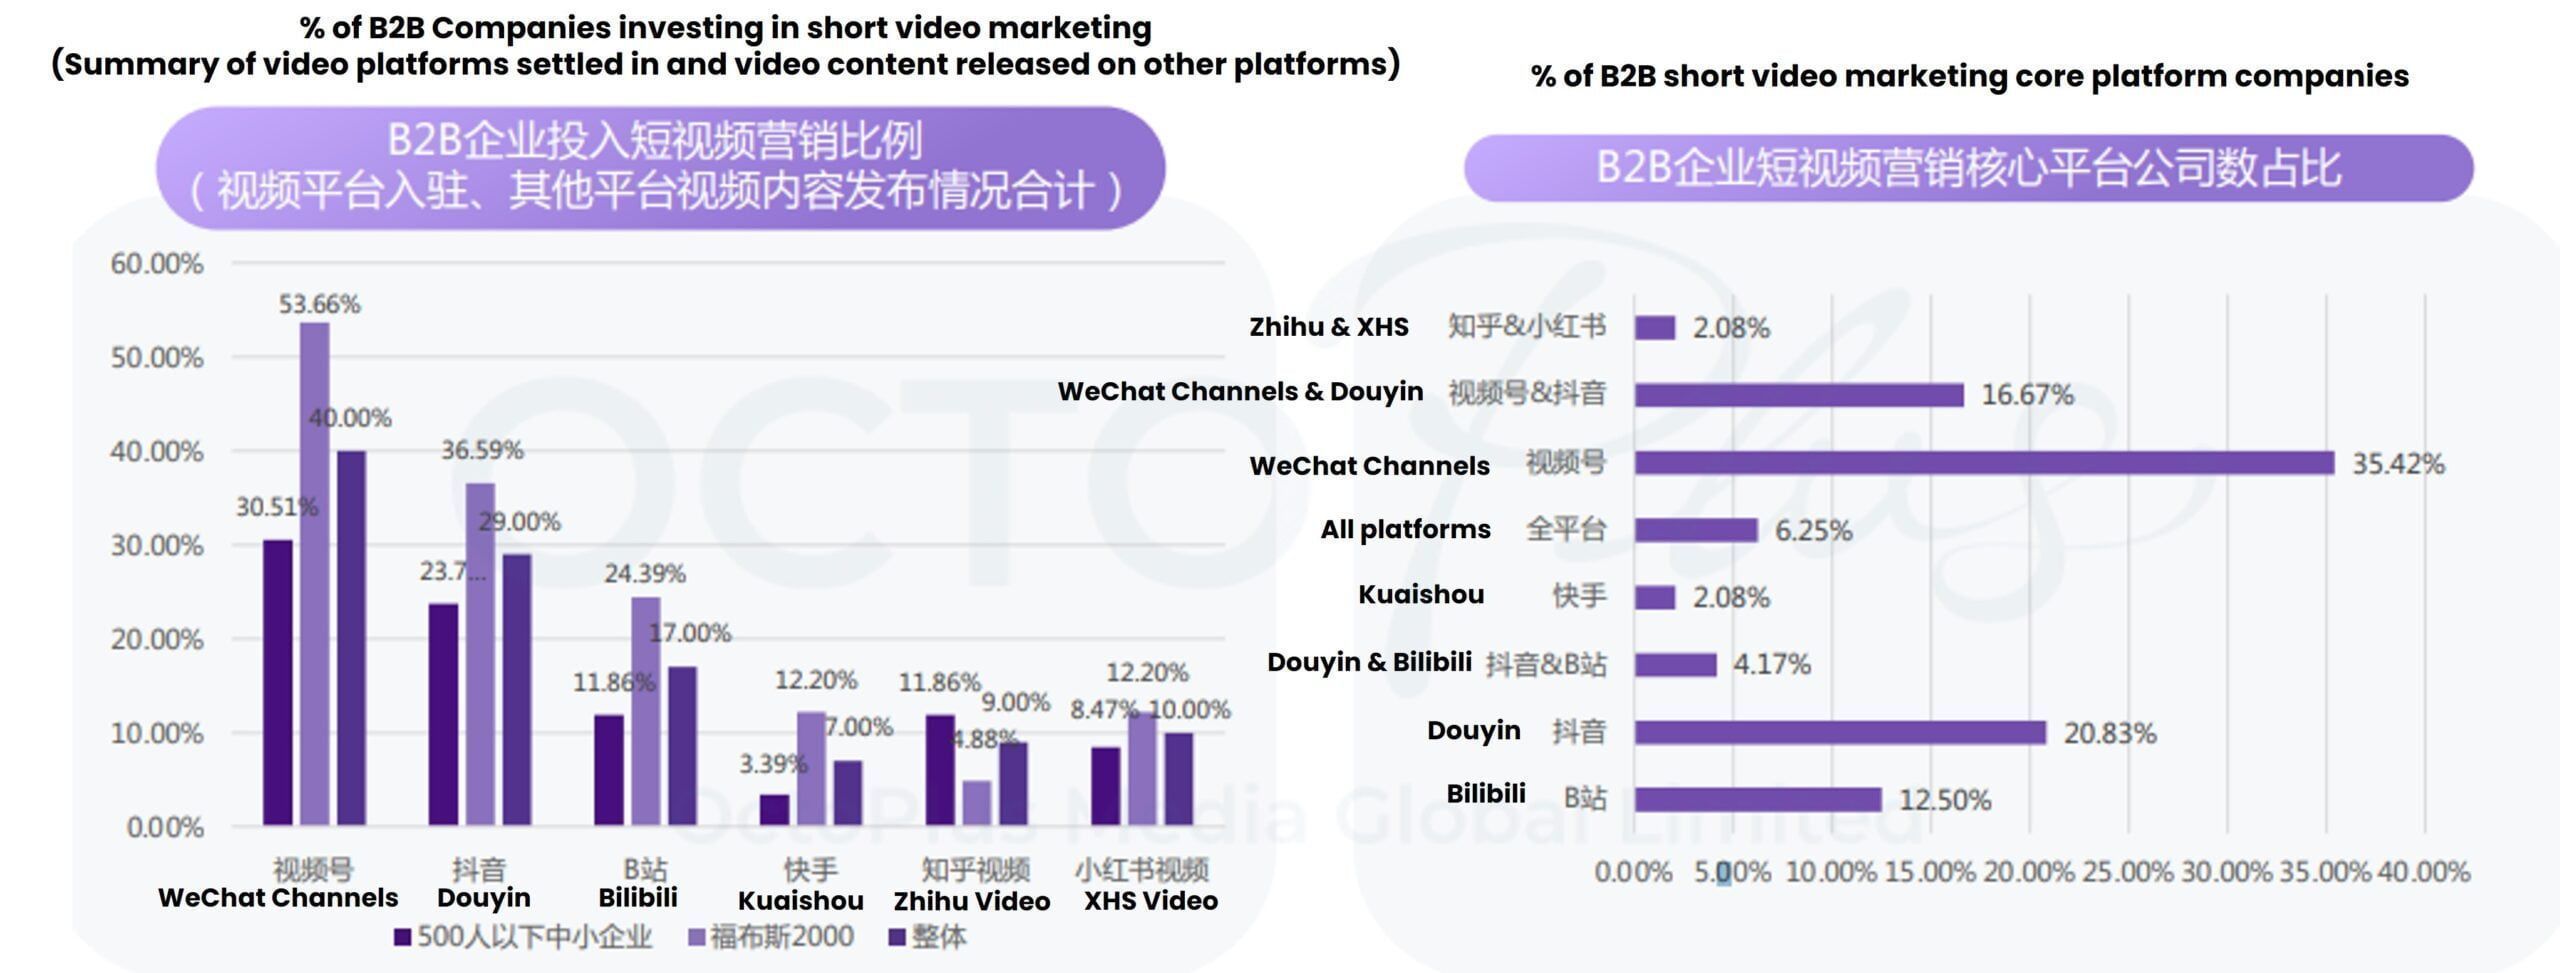 % B2B companies investing in short video marketing